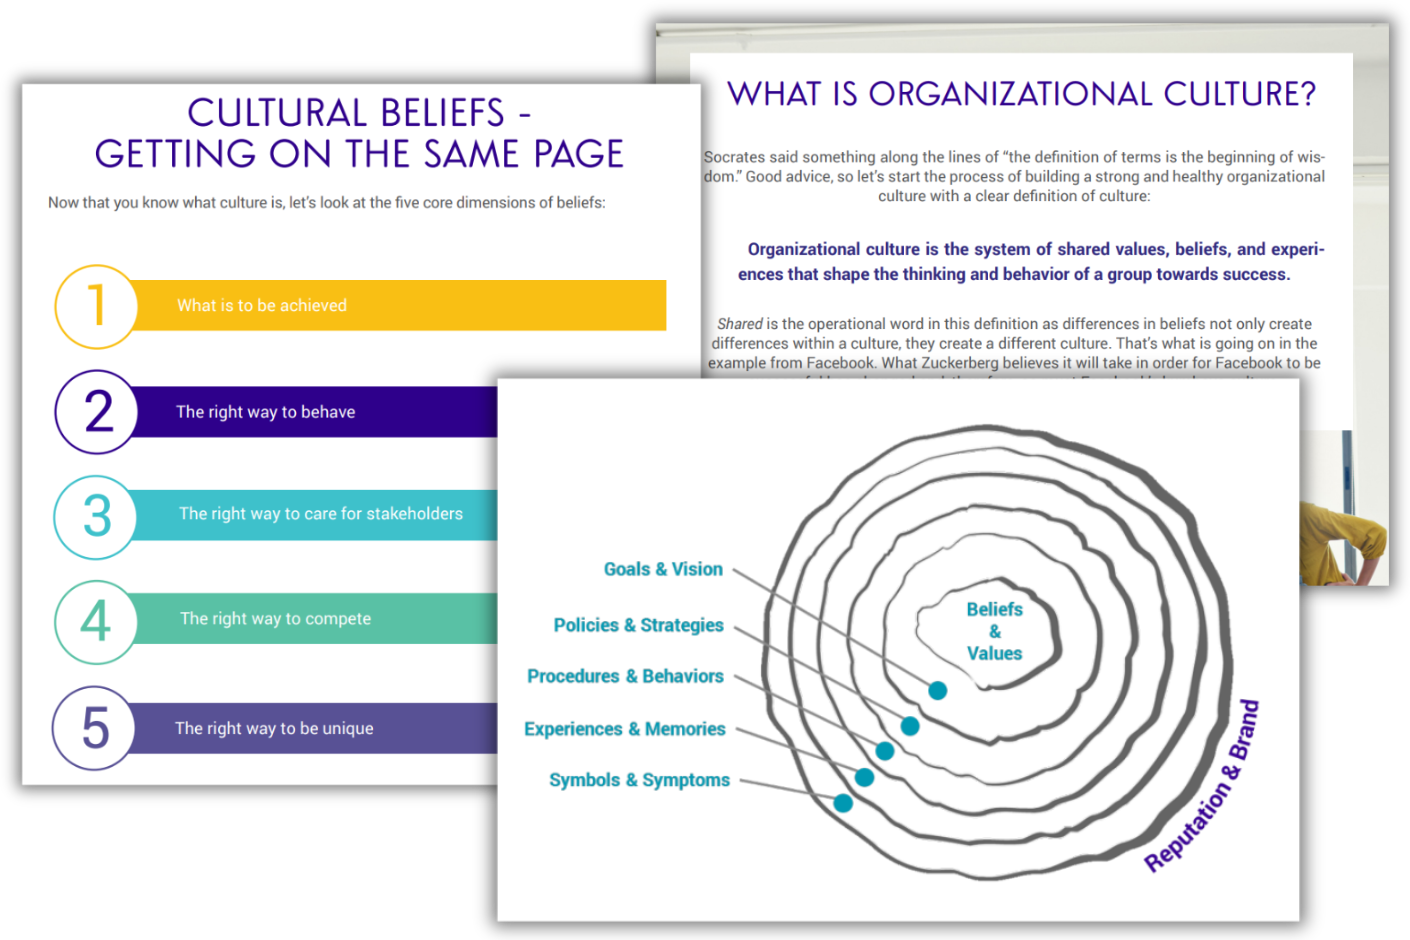 Building organizational culture